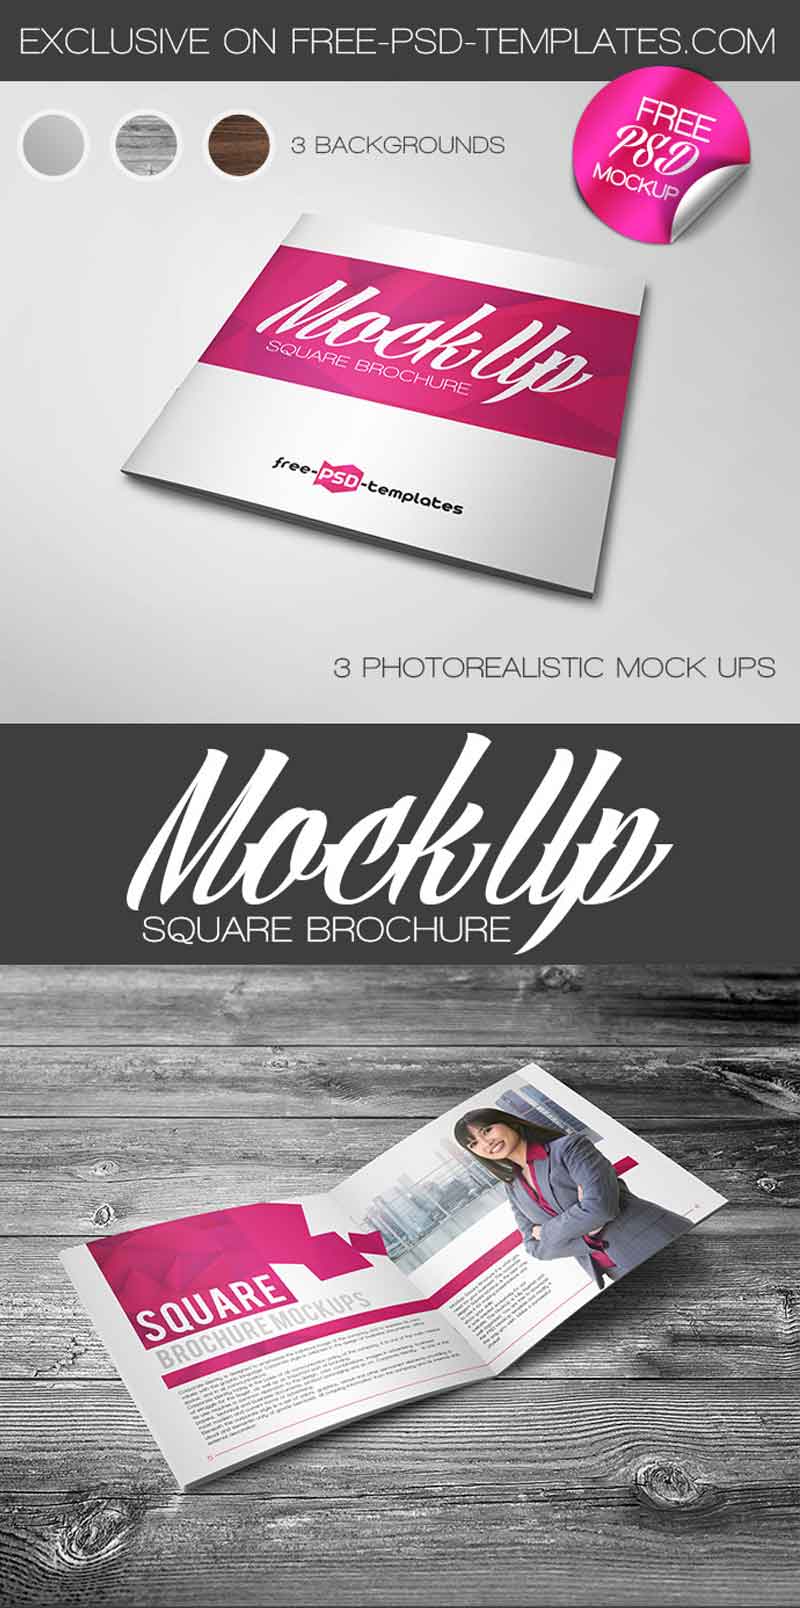 Free-PSD-Square-Brochure-Mockup